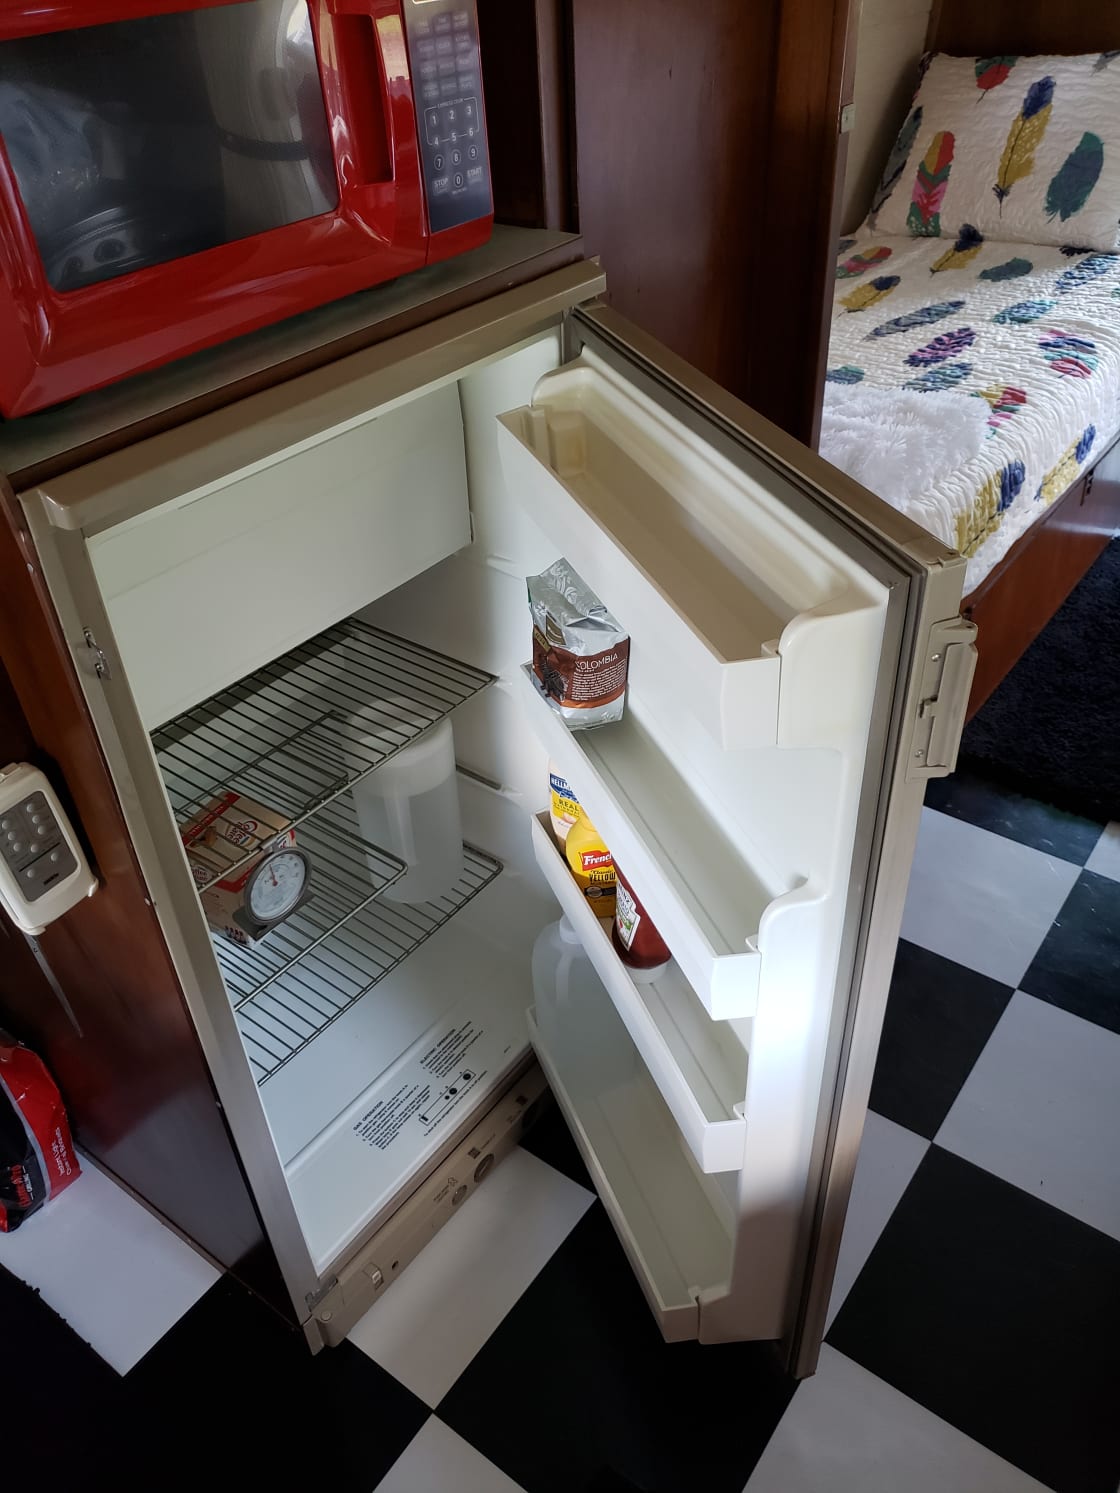 Small fridge with basic condiments.